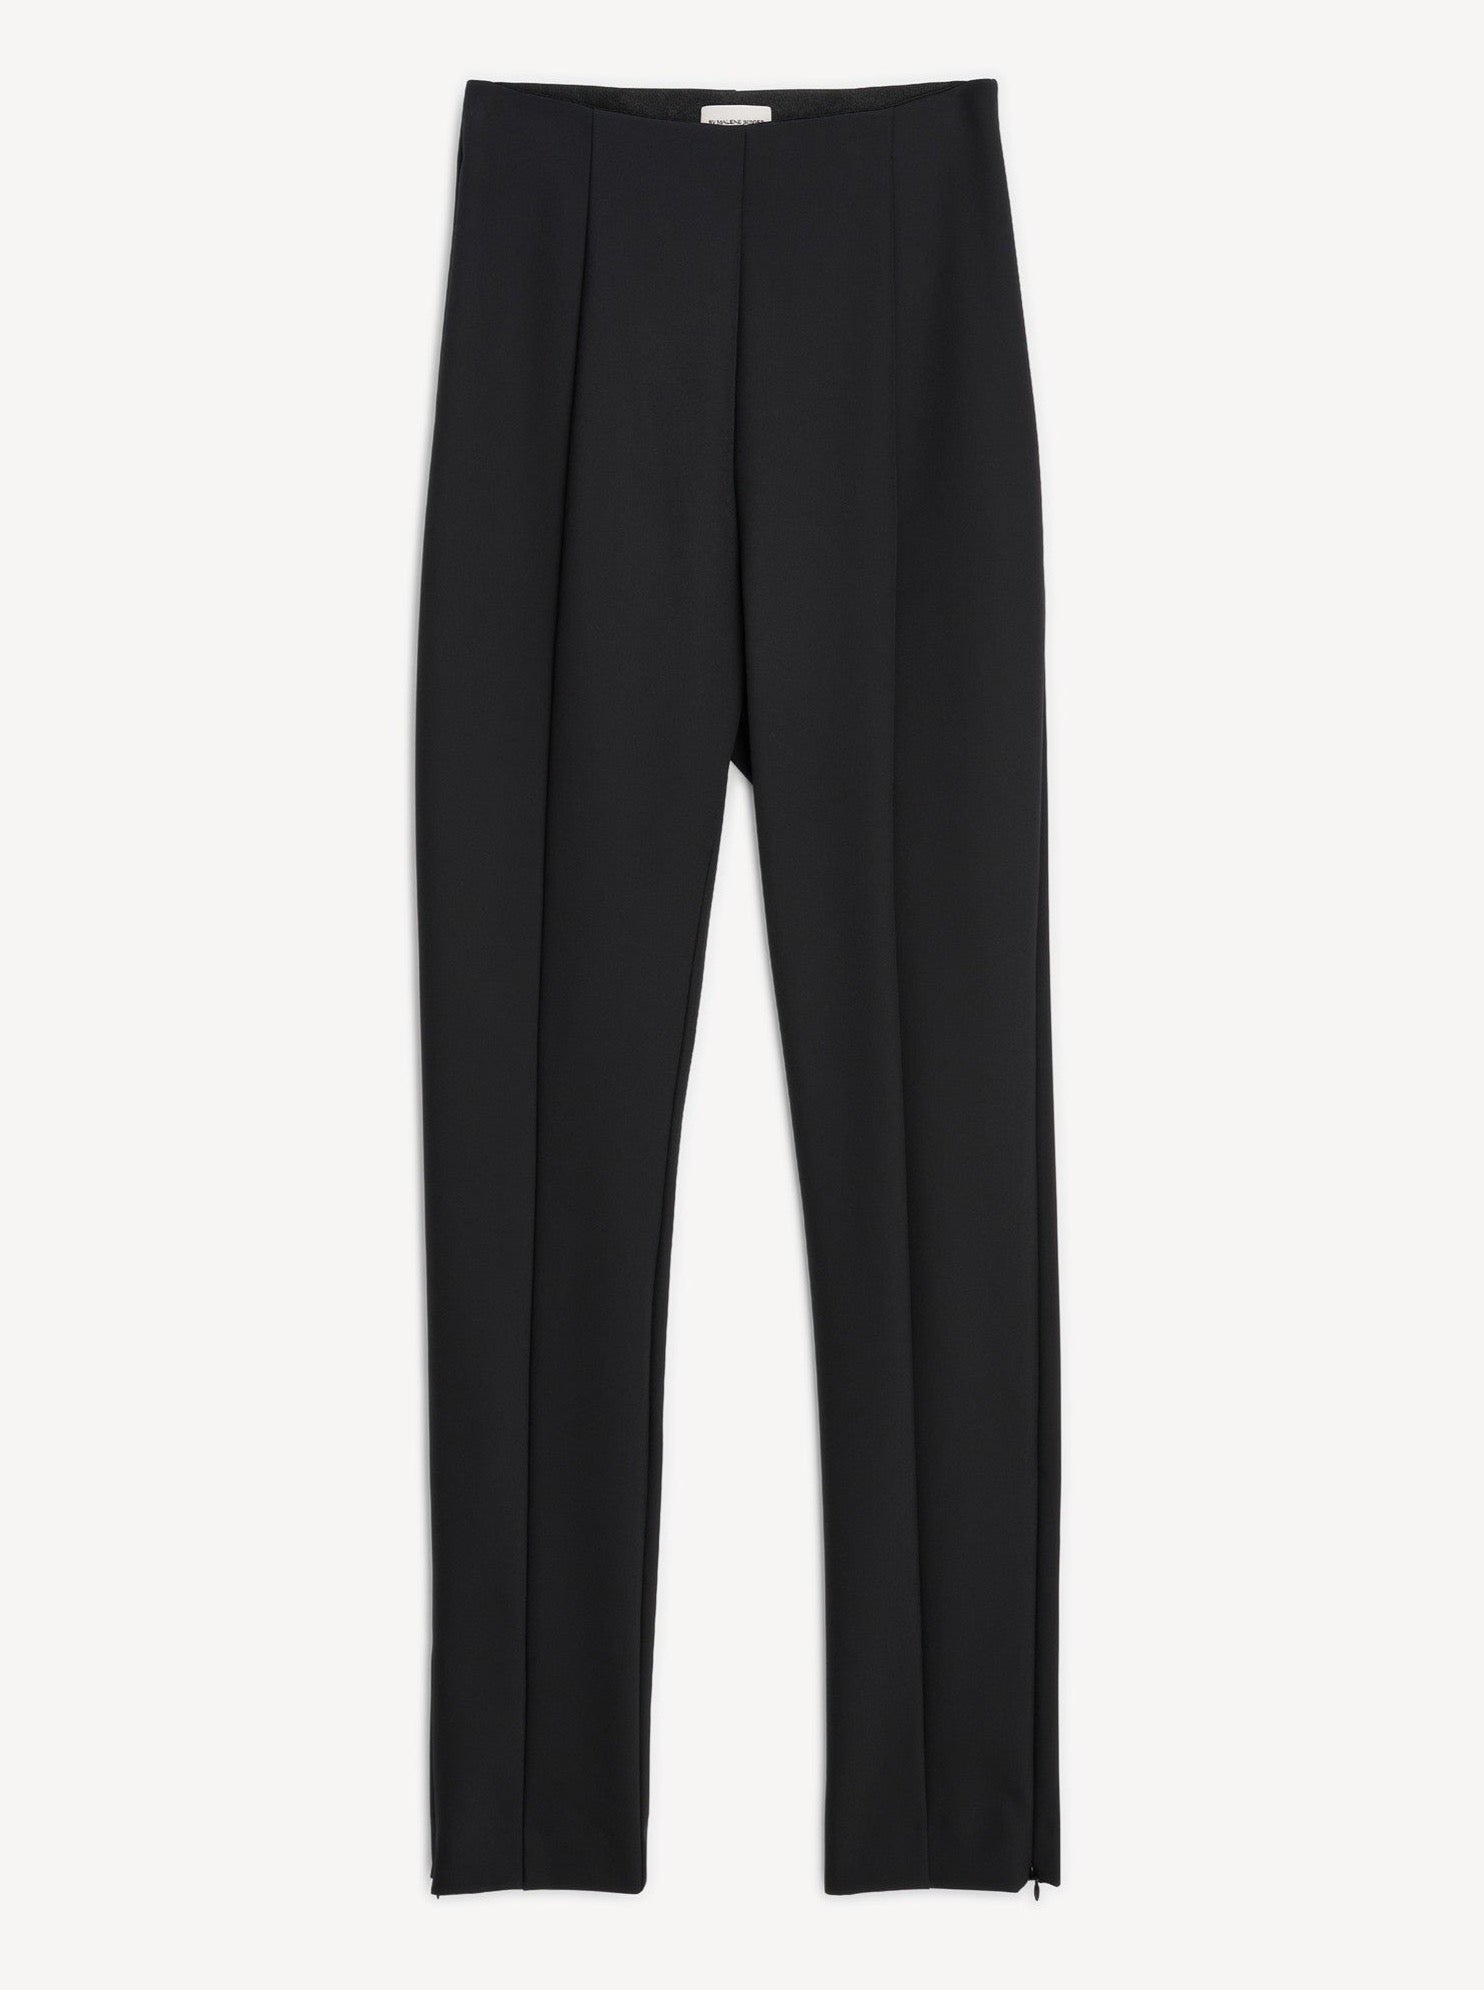 Lisaboa slim trousers, black